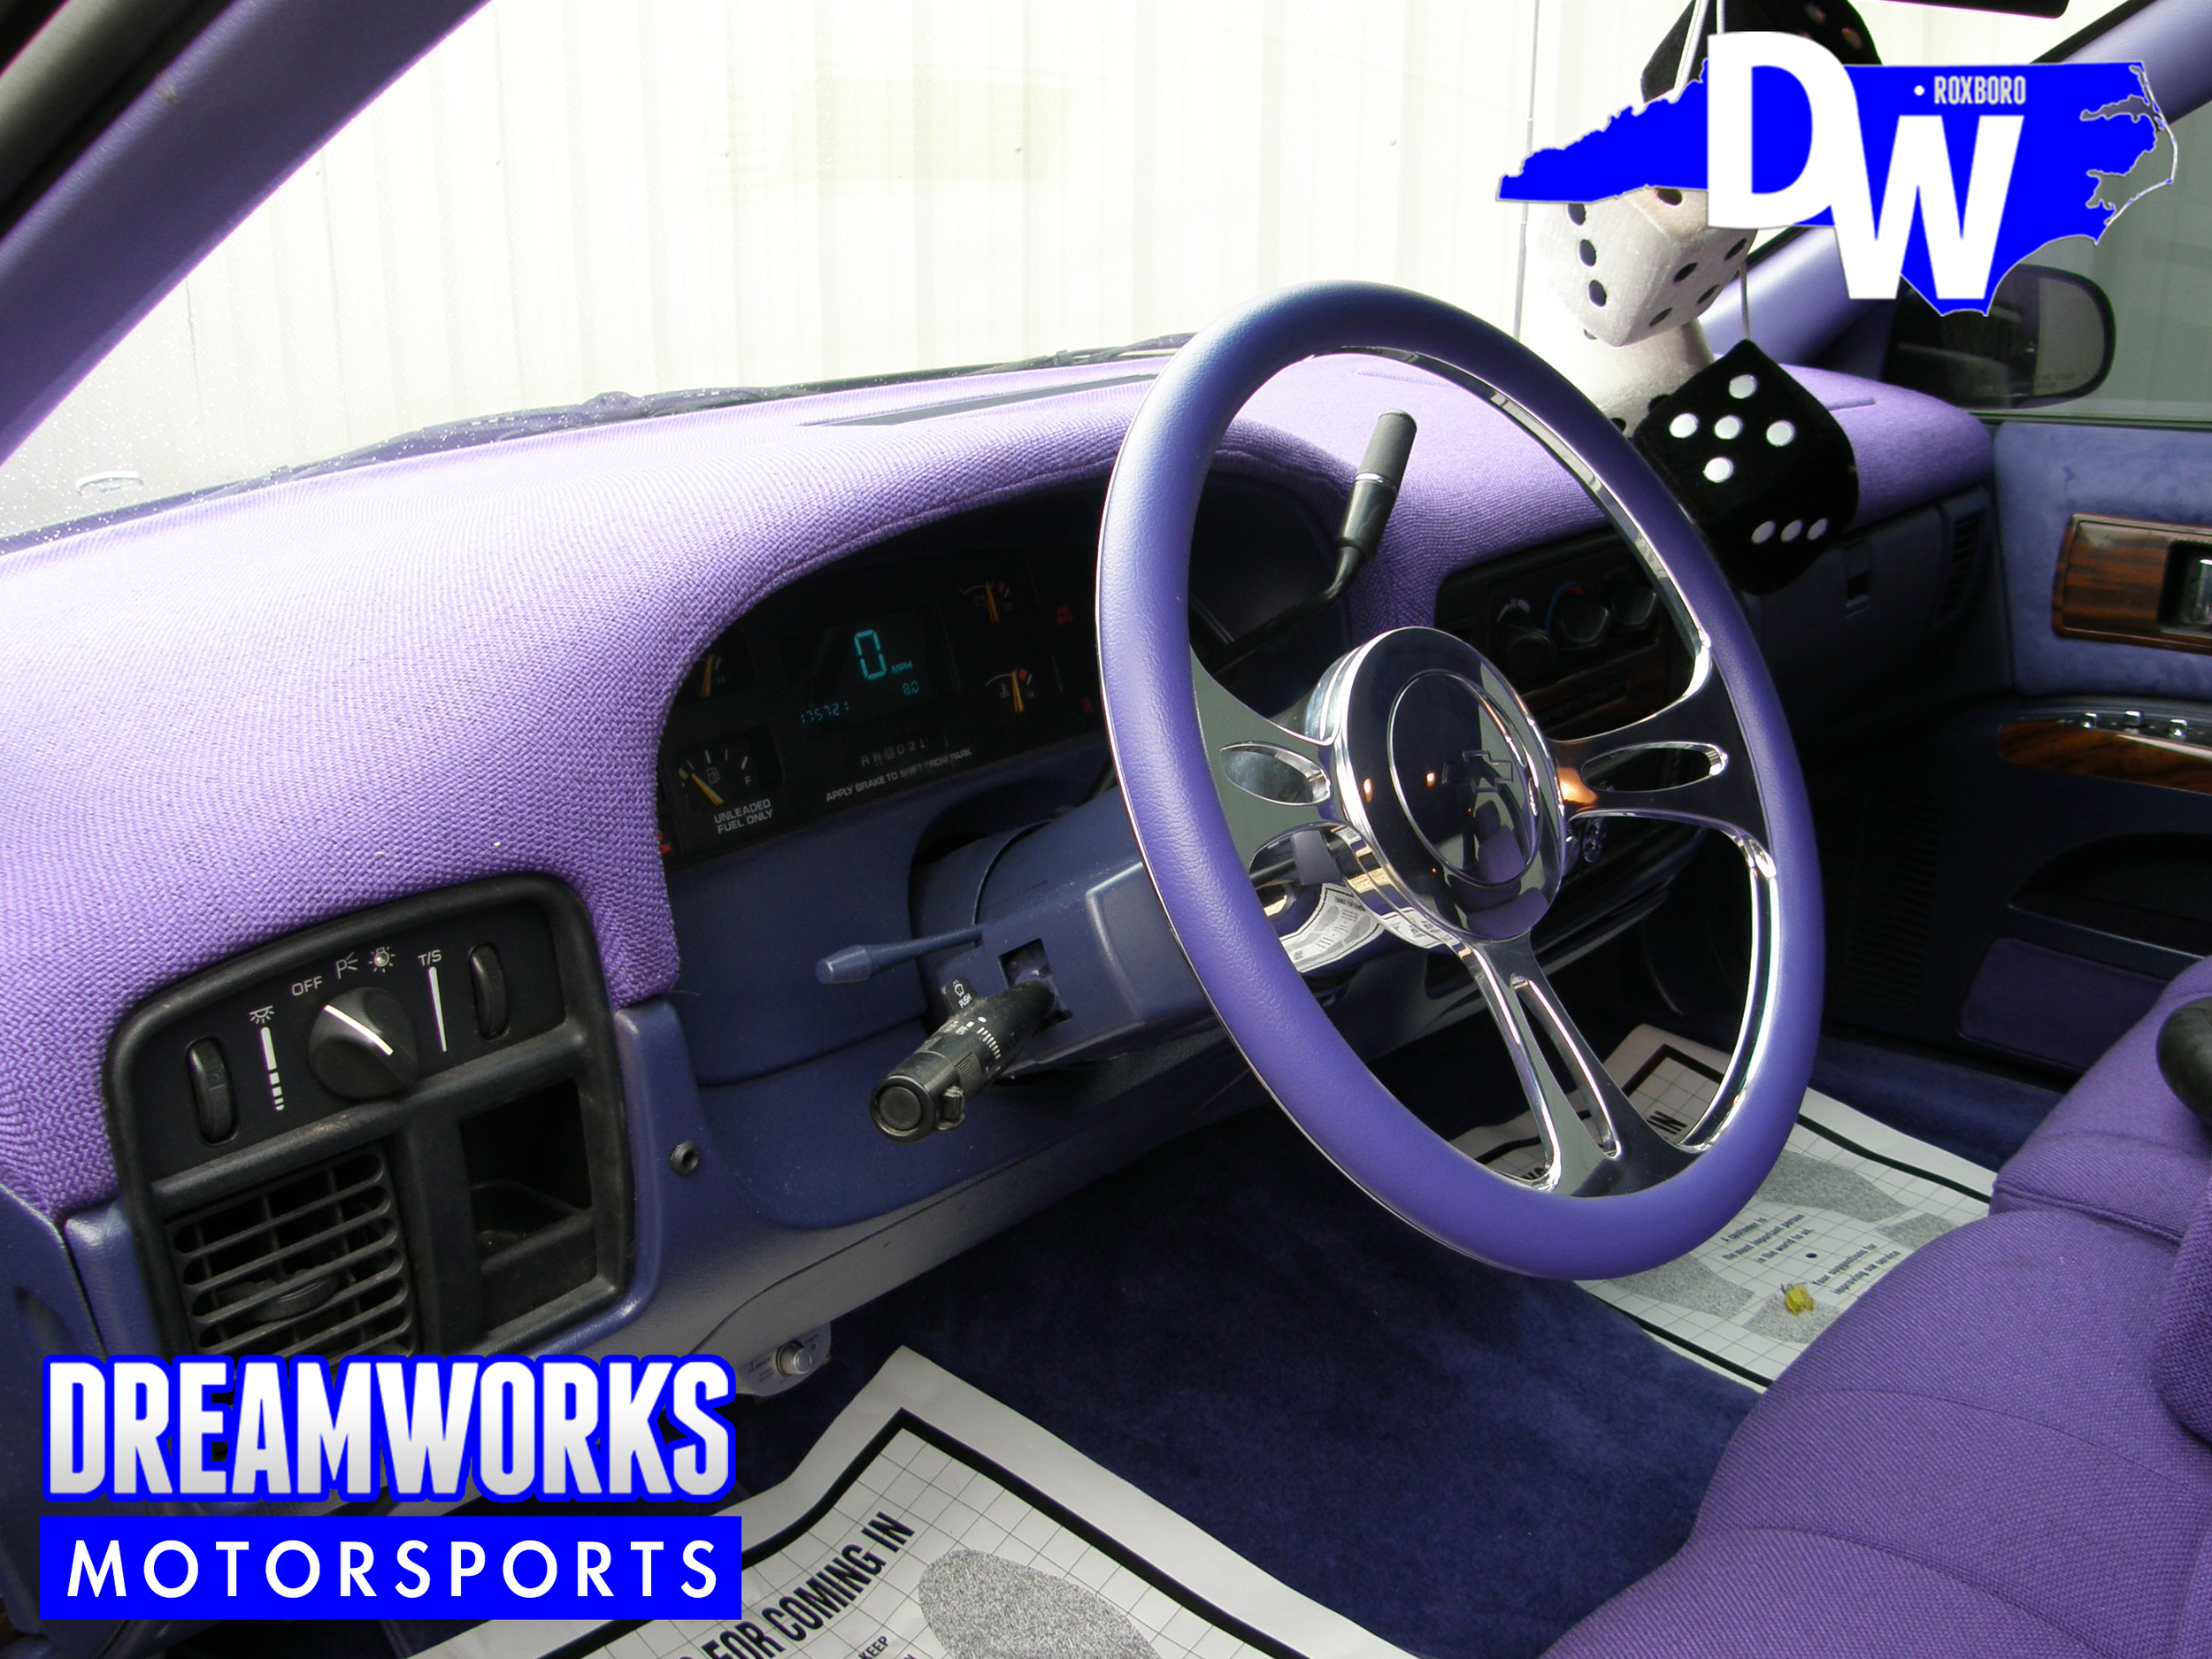 95-Chevrolet-Caprice-Player-Dreamworks-Motorsports-3.jpg